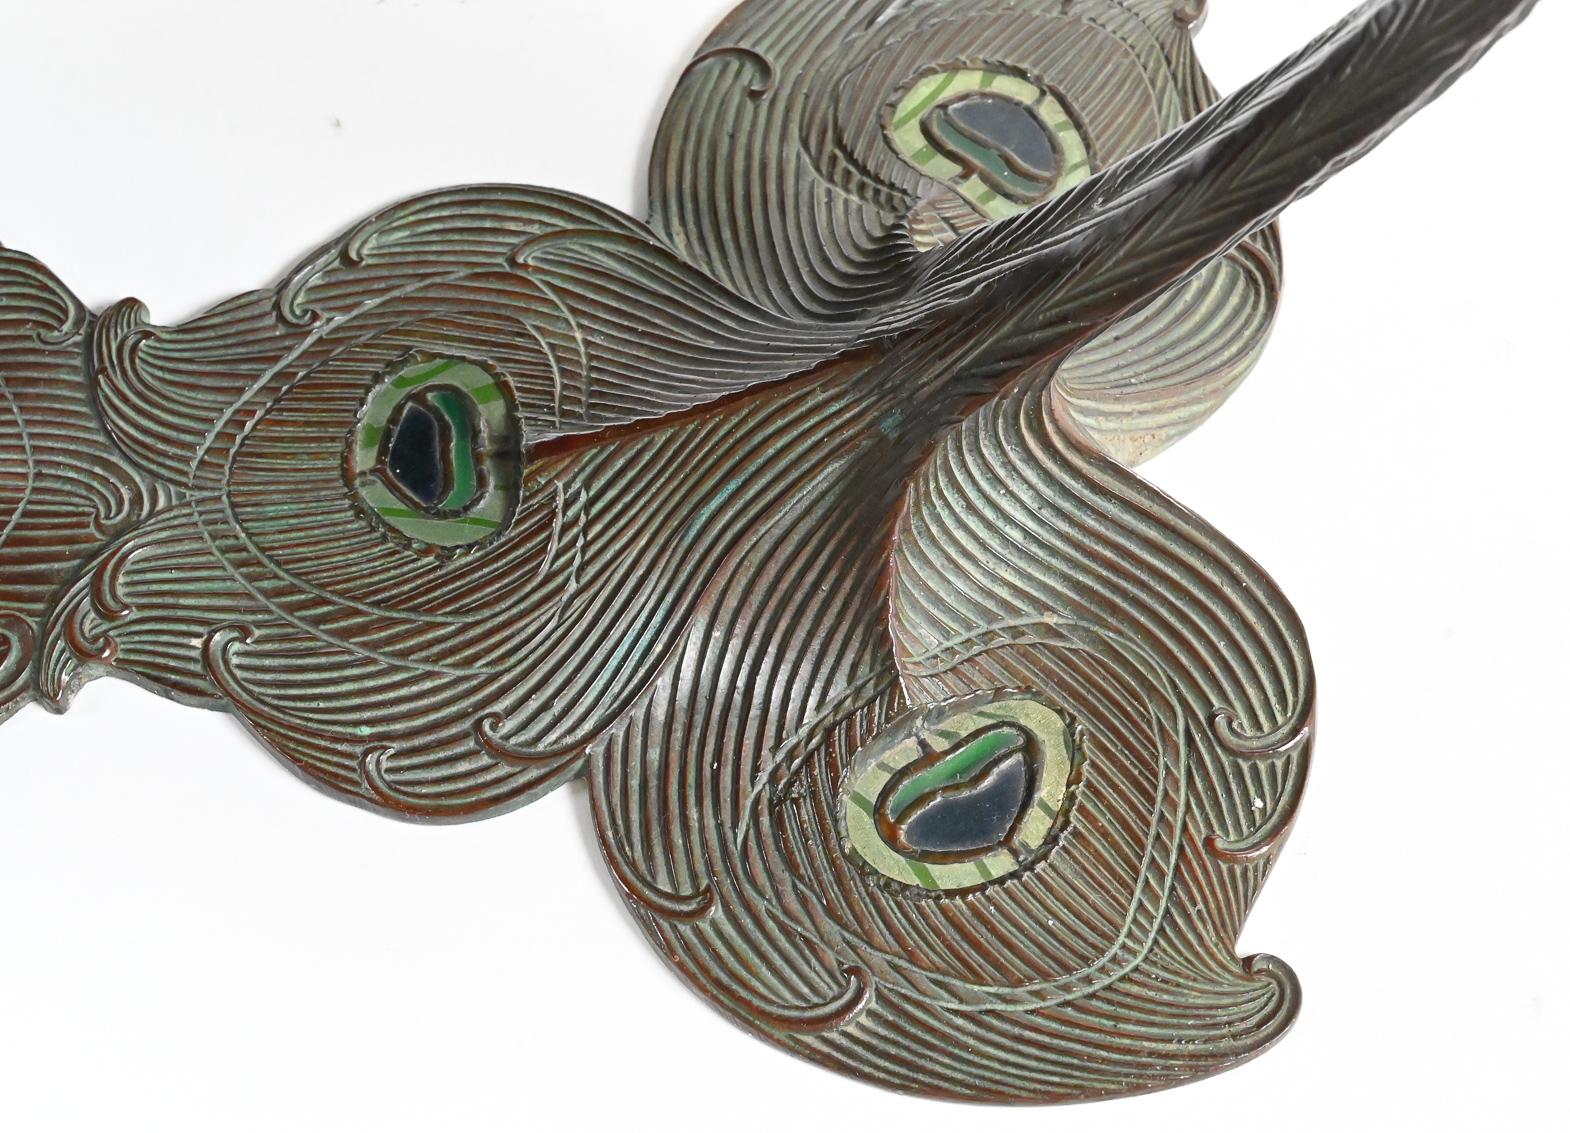 American Tiffany Studios New York Glass and Bronze “Peacock” Mirror